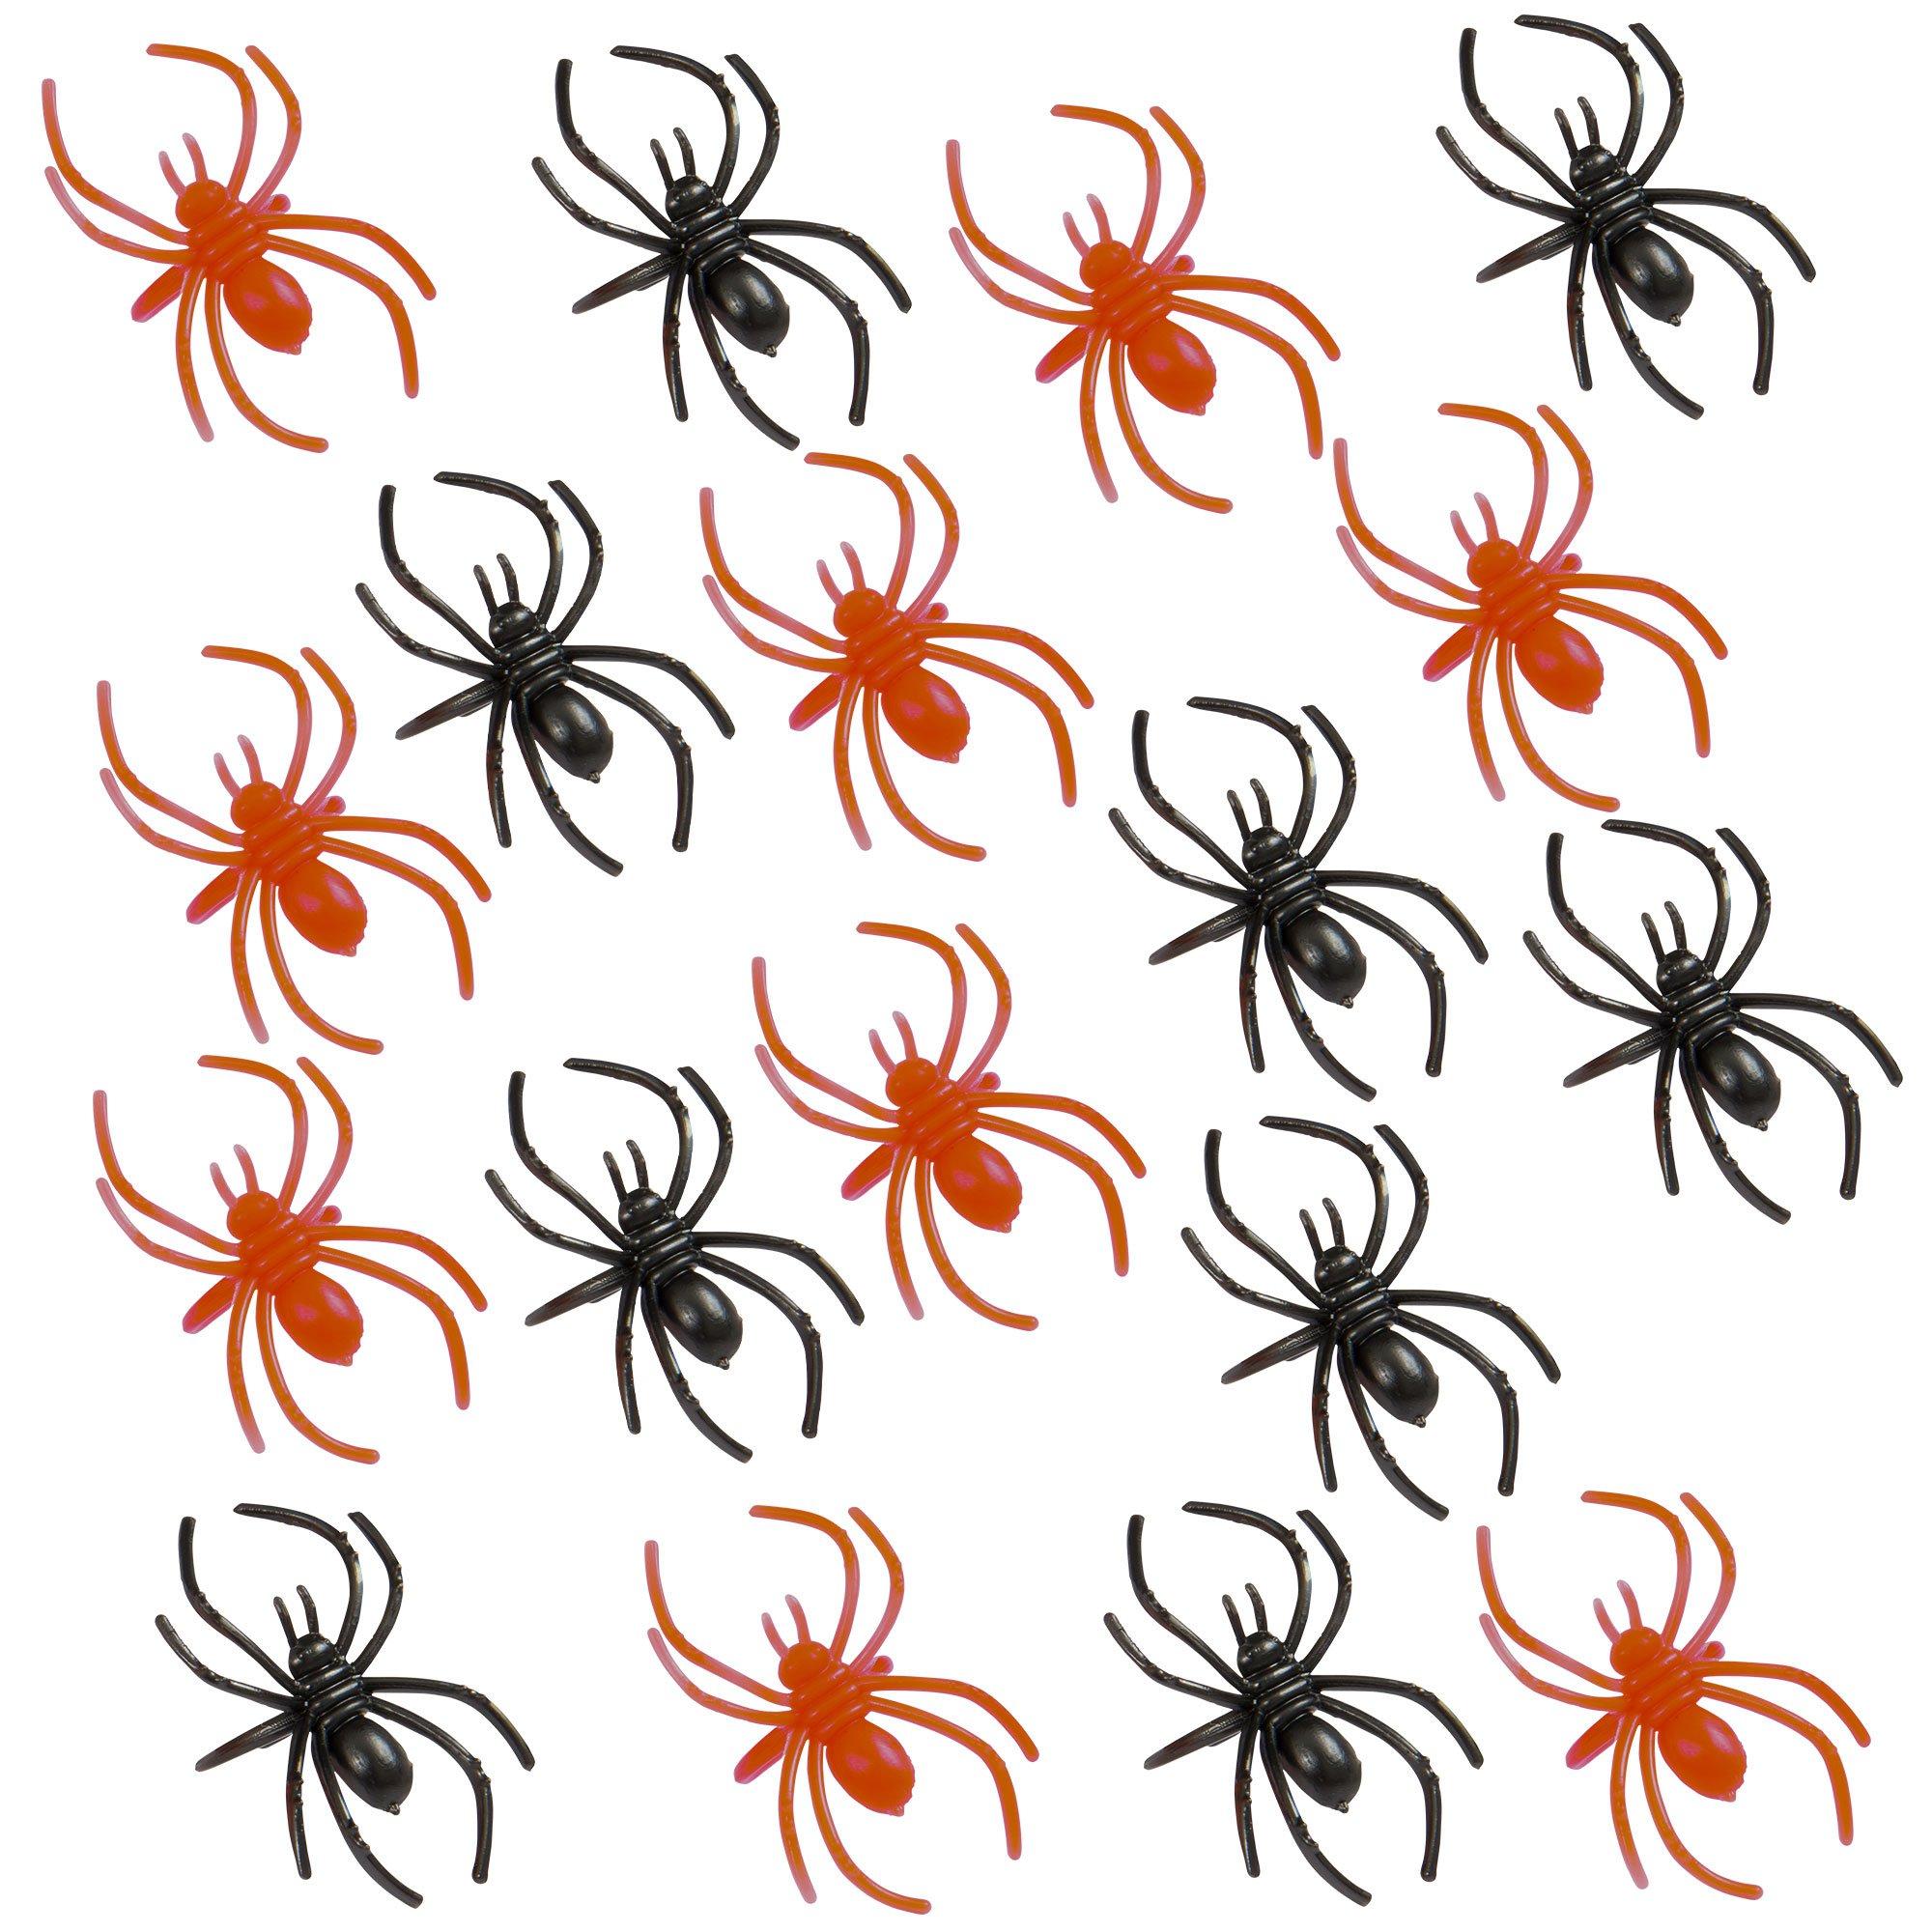 Black & Orange Spider Rings | Party City